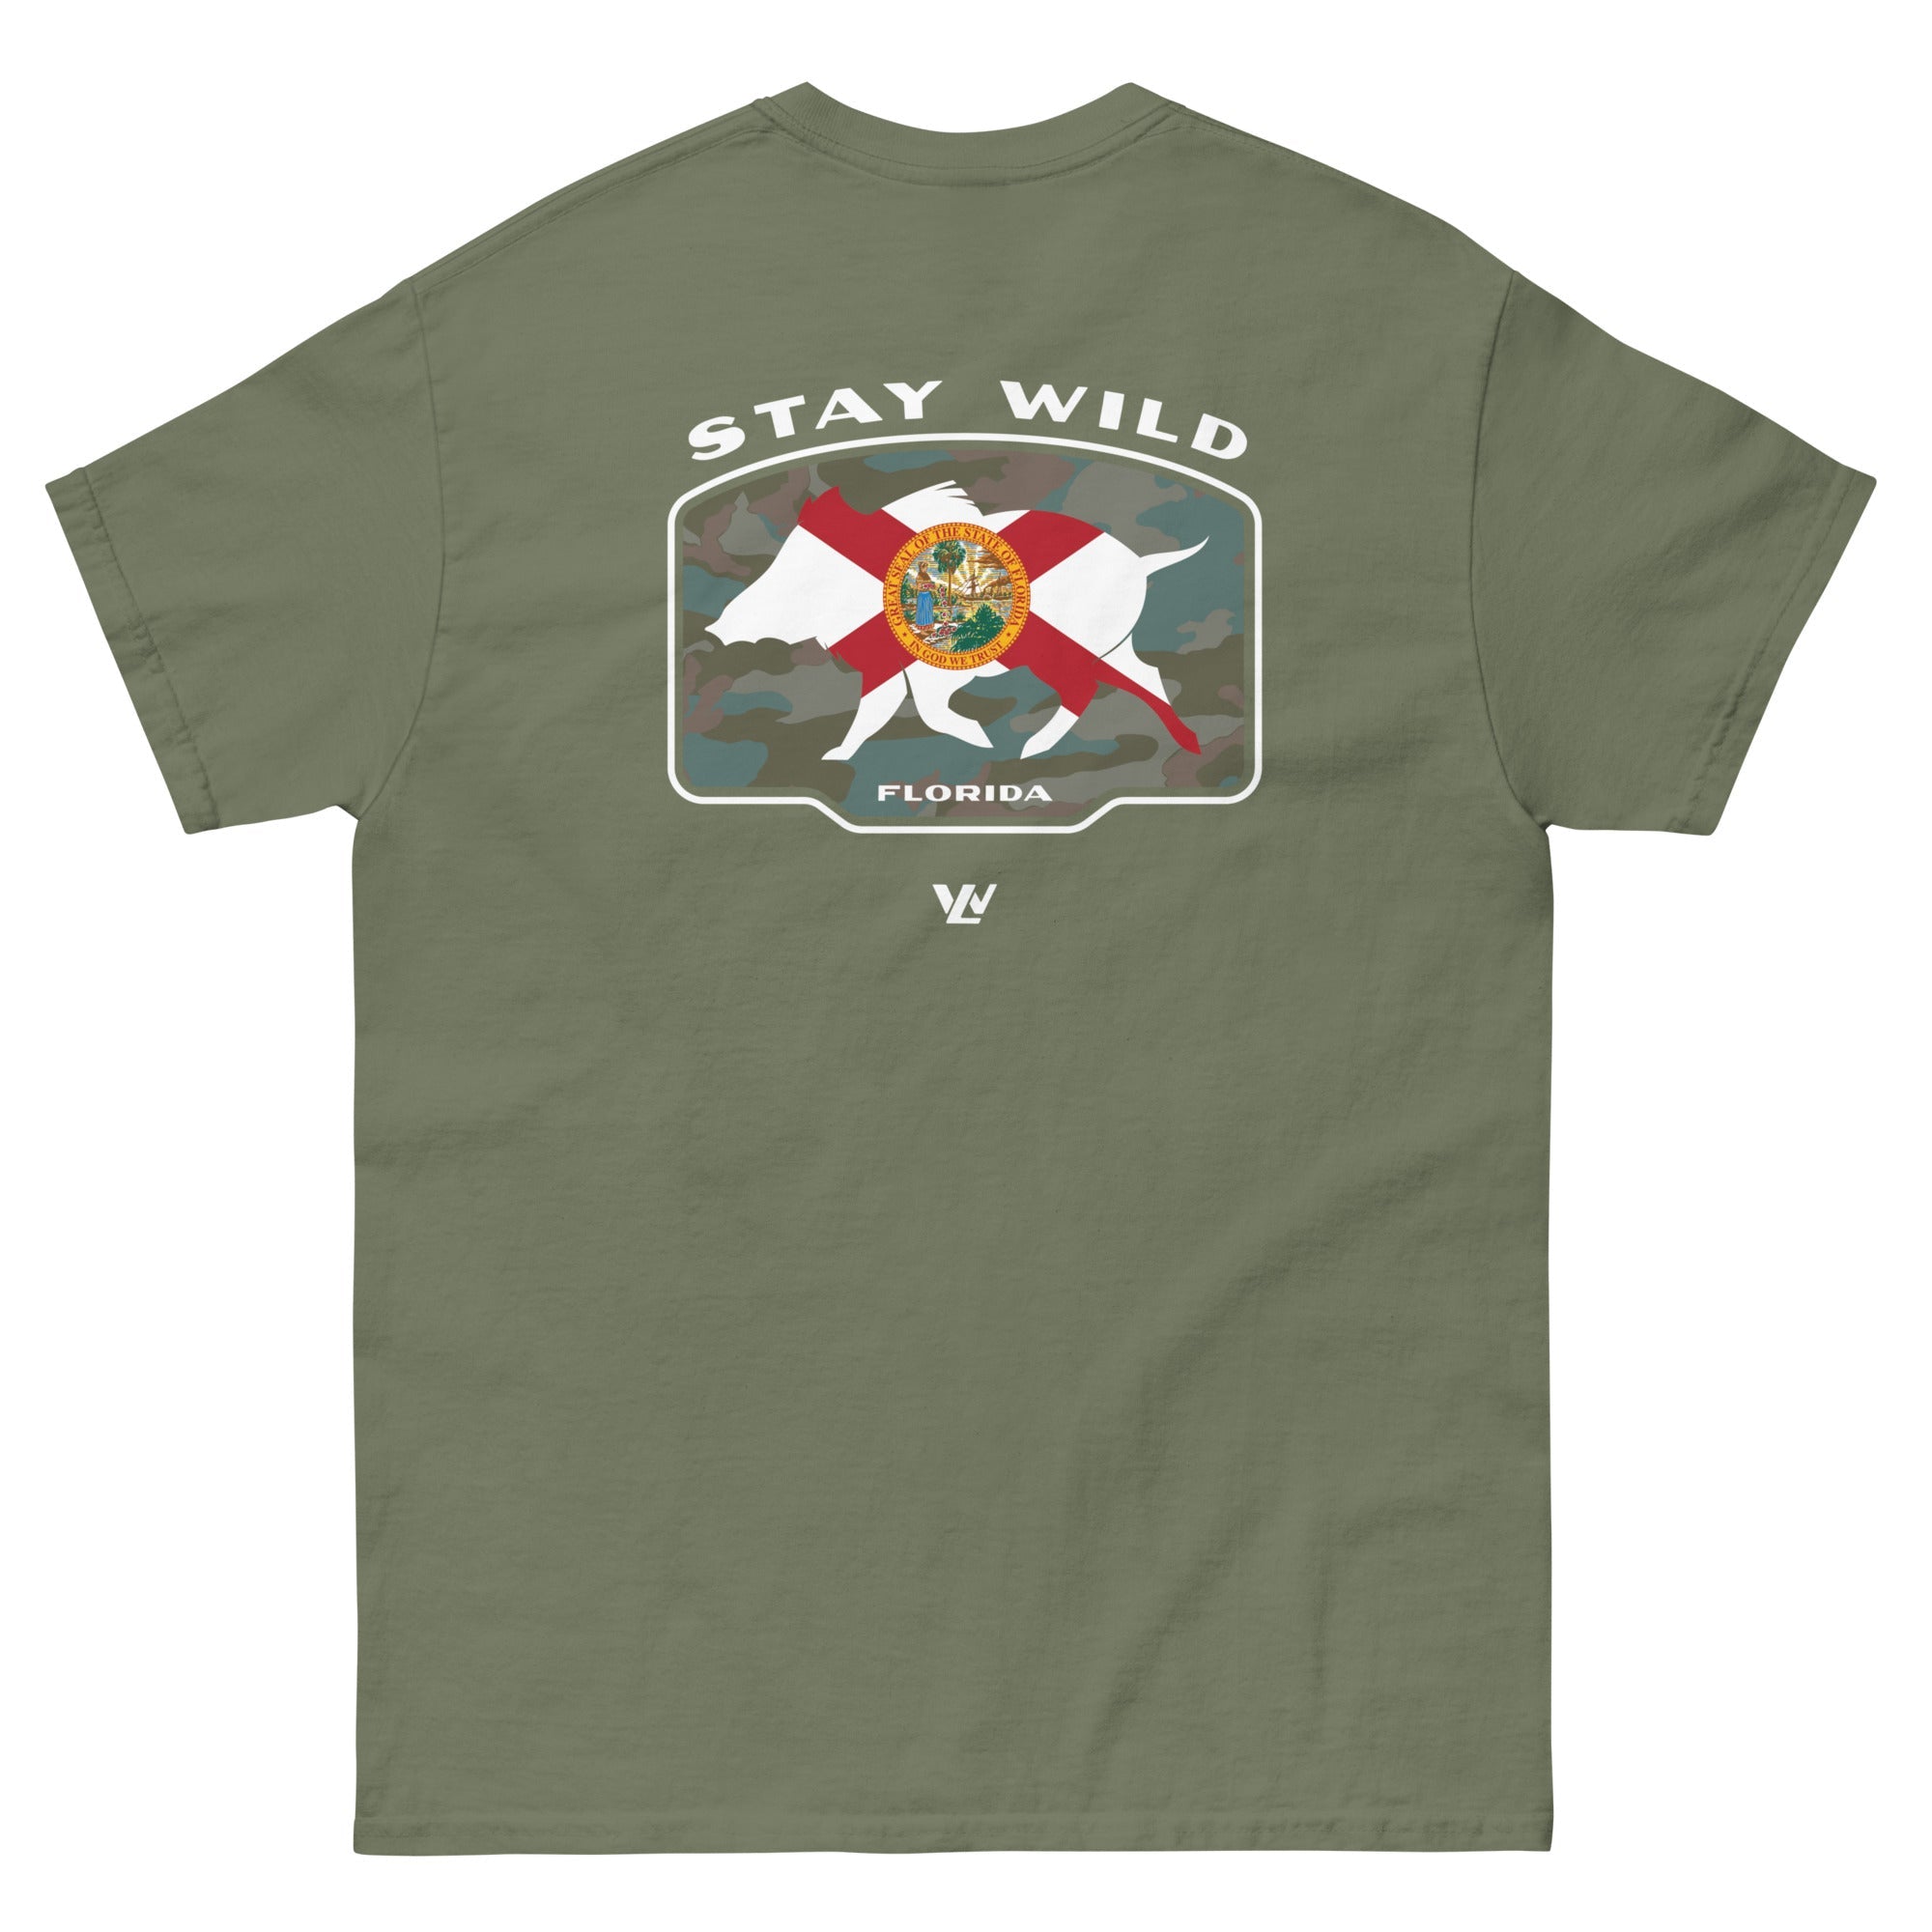 Stay Wild Florida T-Shirt - Wilding Life